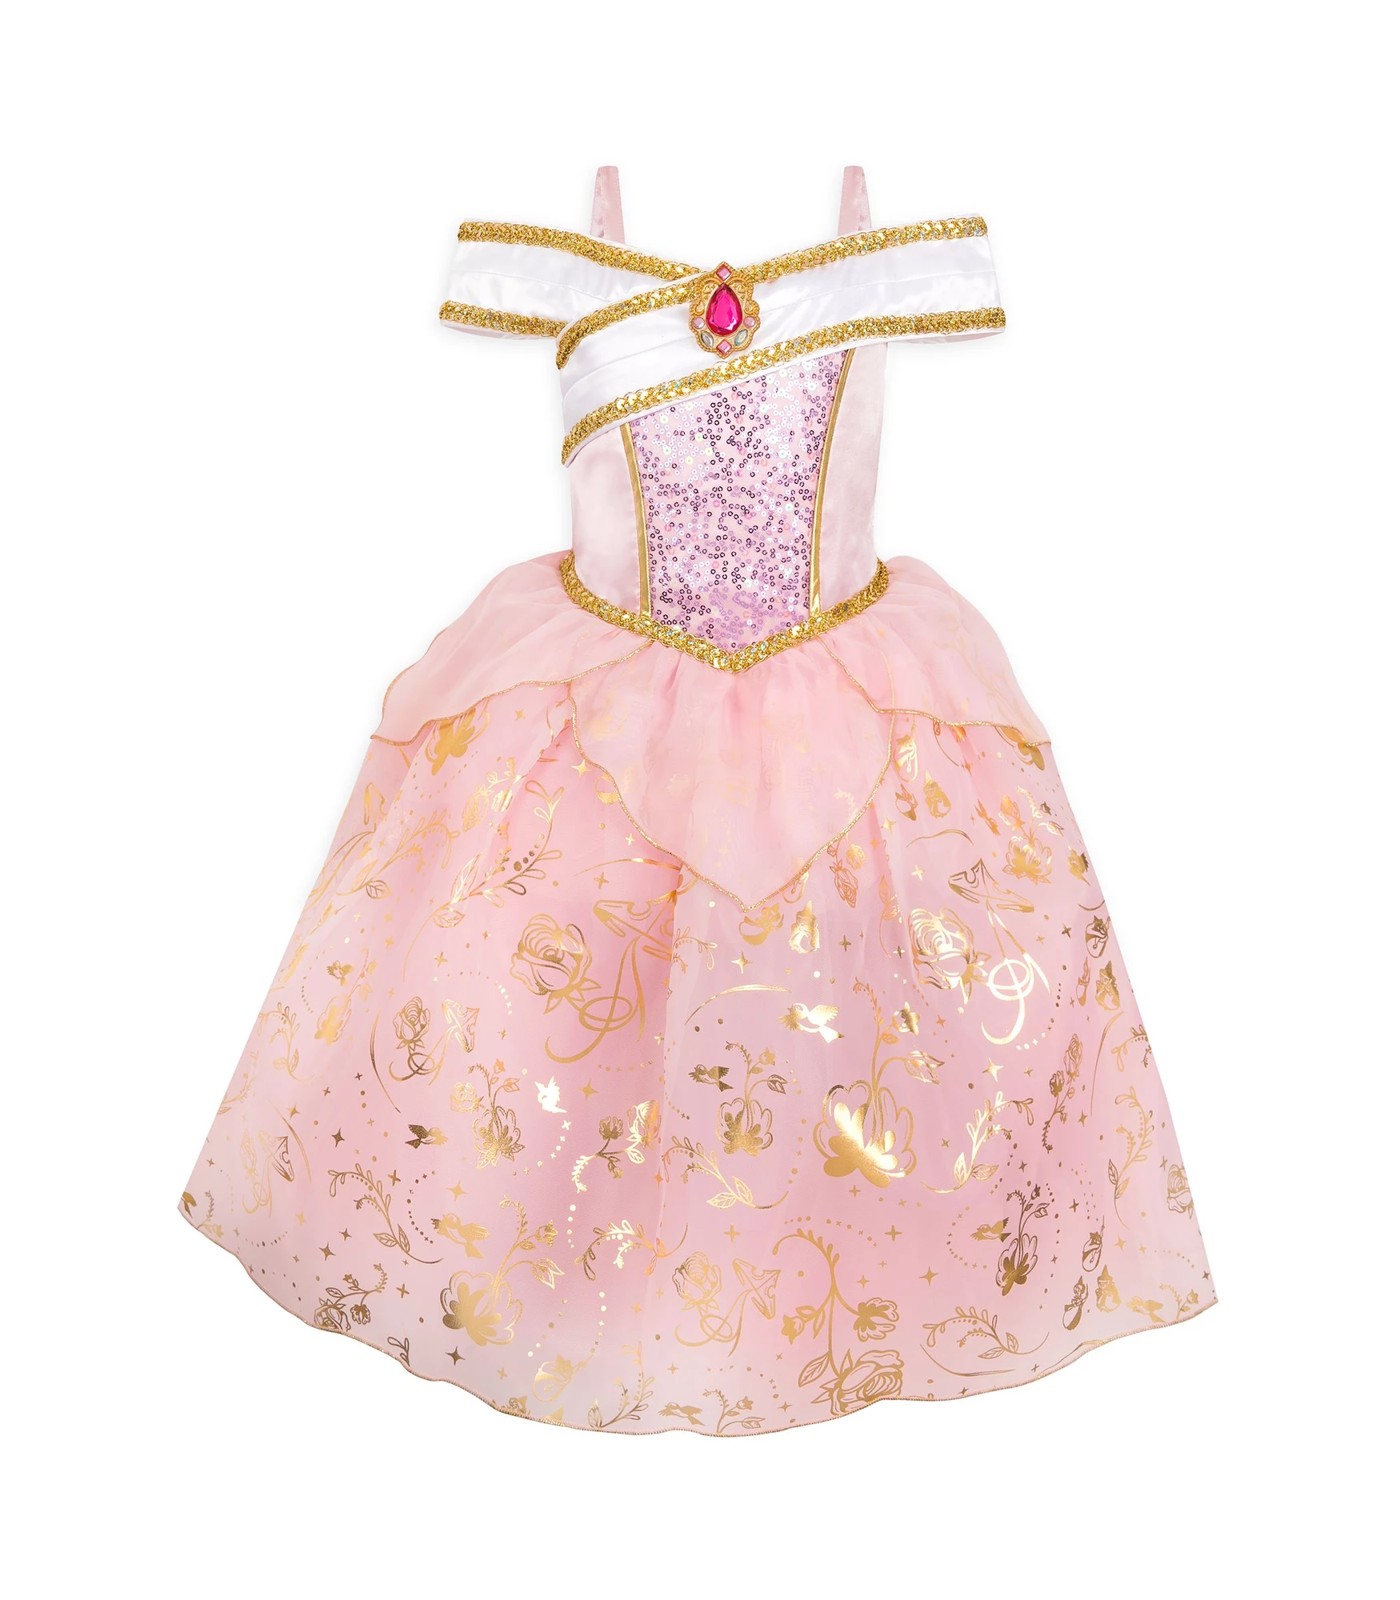 Disney Princess - Aurora - Costume for Kids - Sleeping Beauty | Target ...